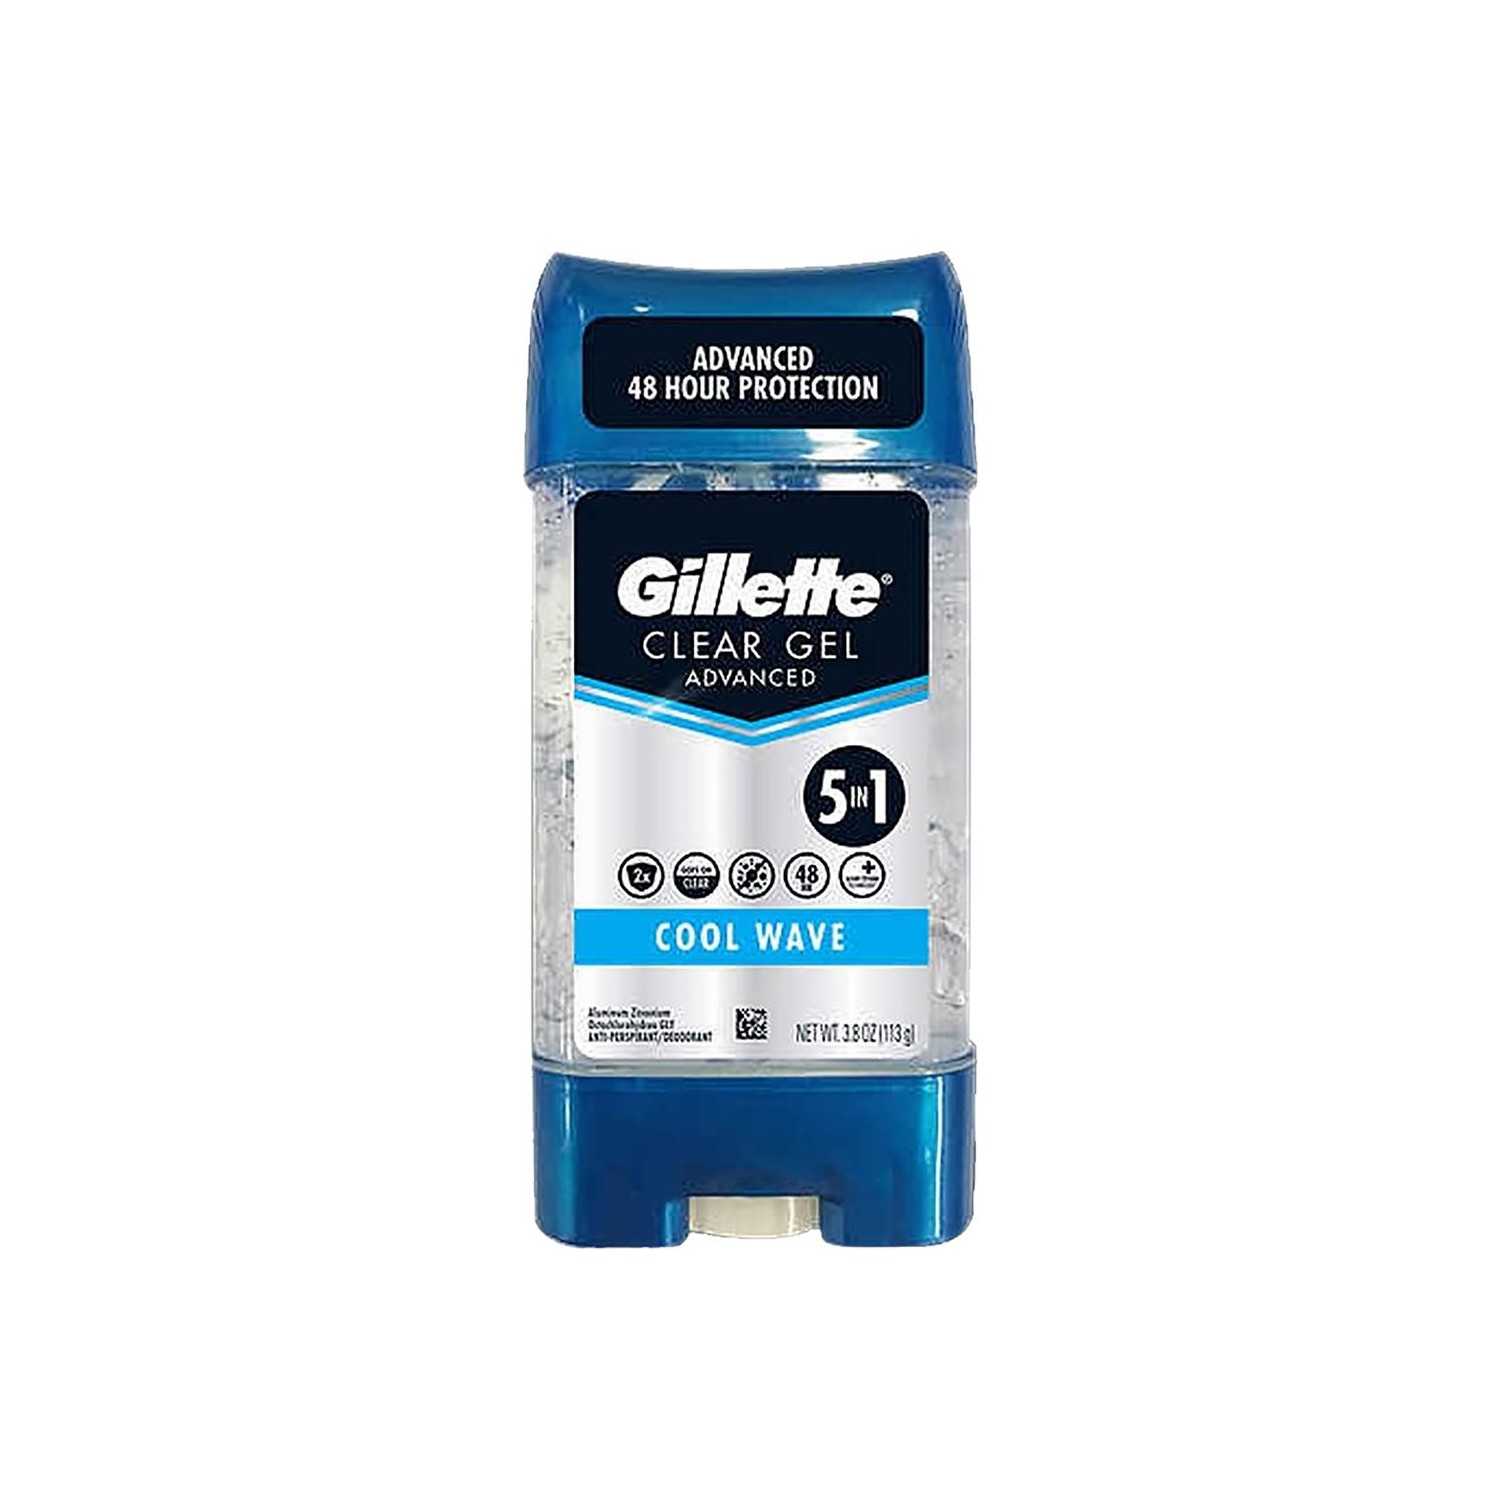 Gilette deodarahnt 3,8z (107g) 5ct Clear Gel cool Wave. Advanced gel